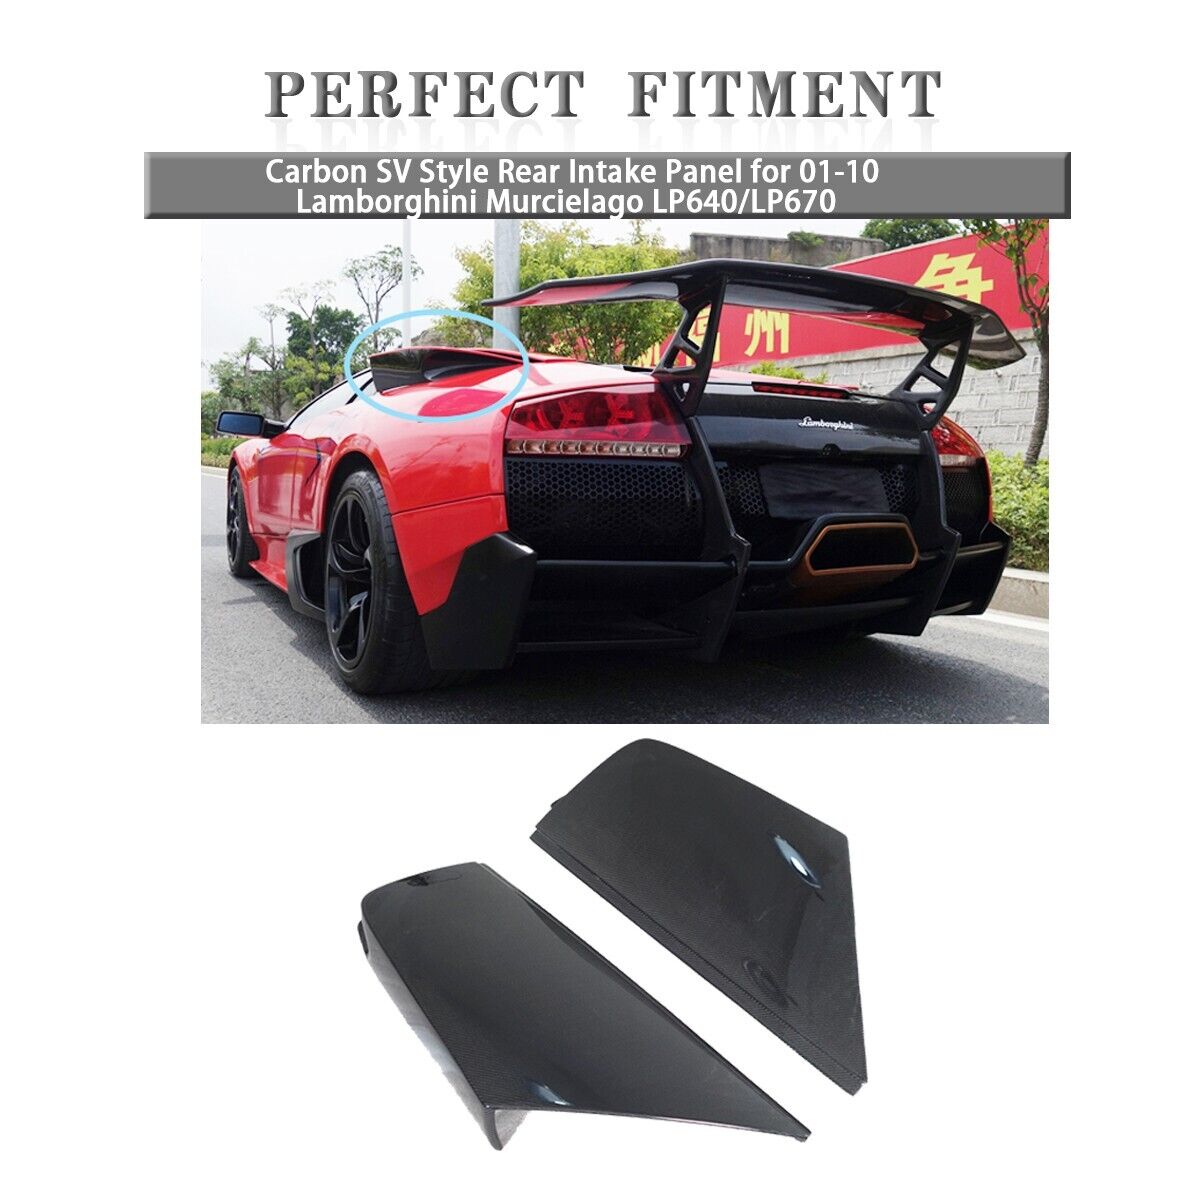 Carbon SV Style Rear Intake Panel for 01-10 Lamborghini Murcielago LP640/LP670